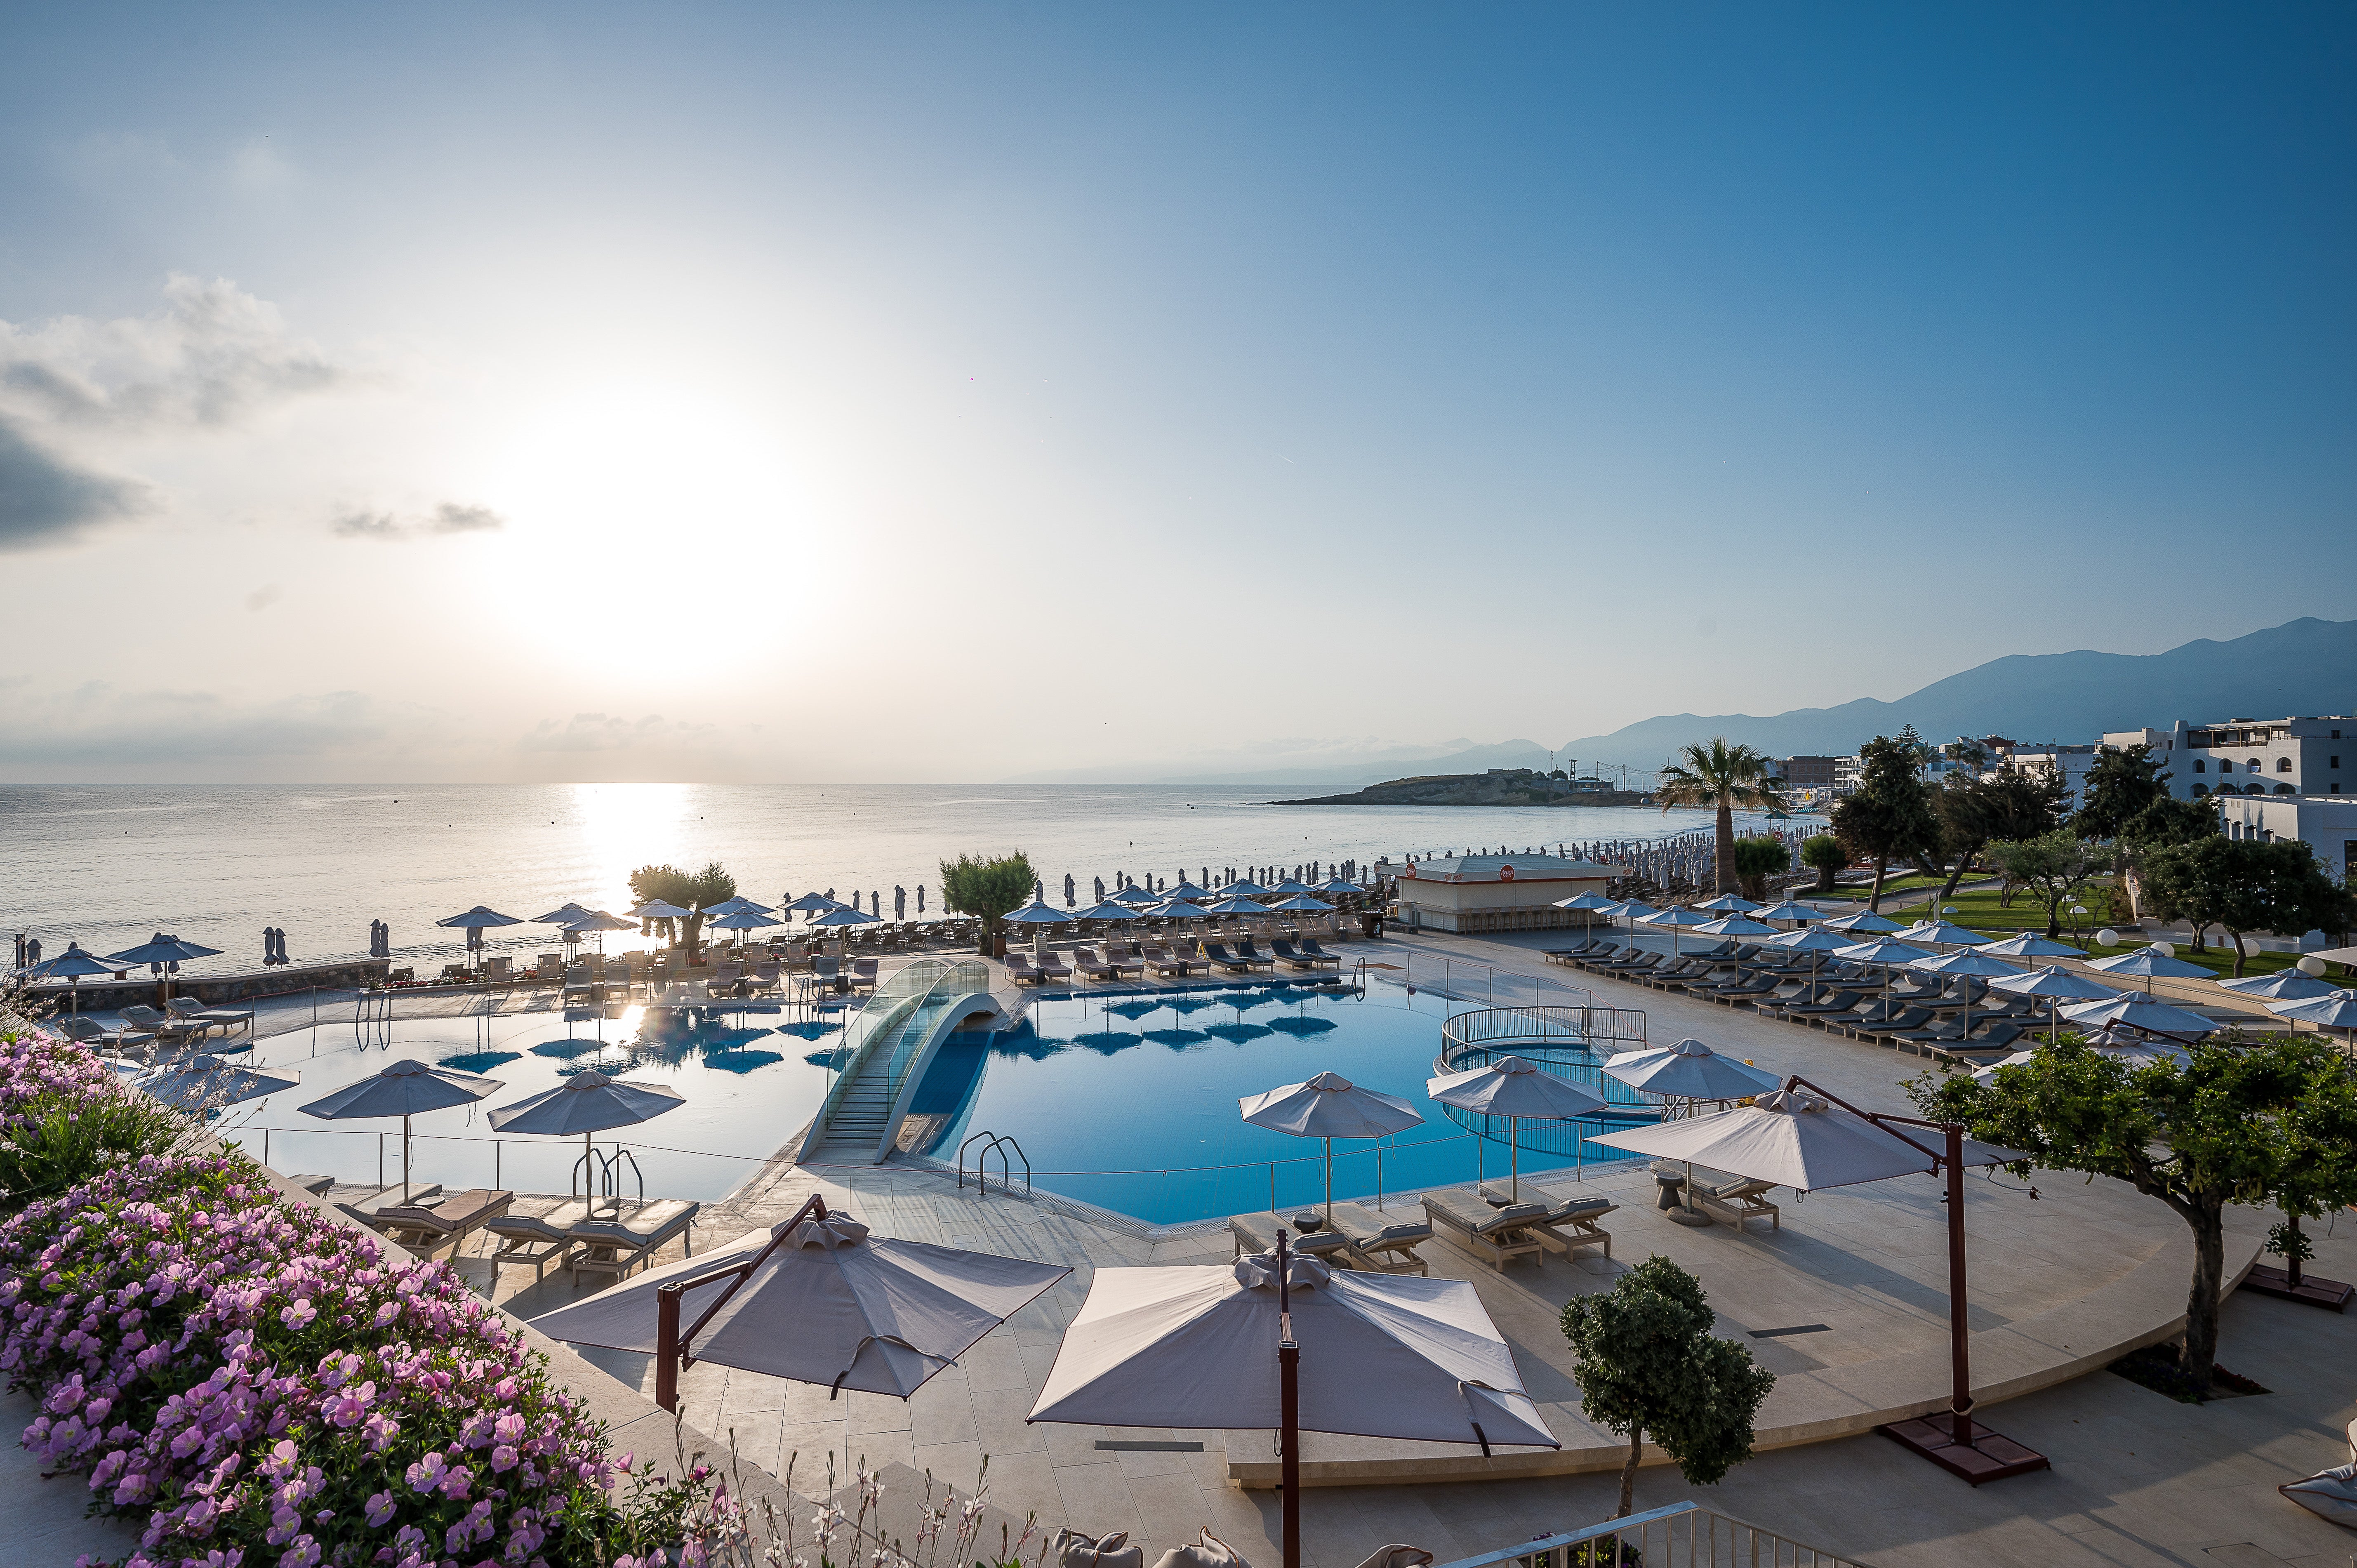 The main pool area at Creta Maris has been revamped